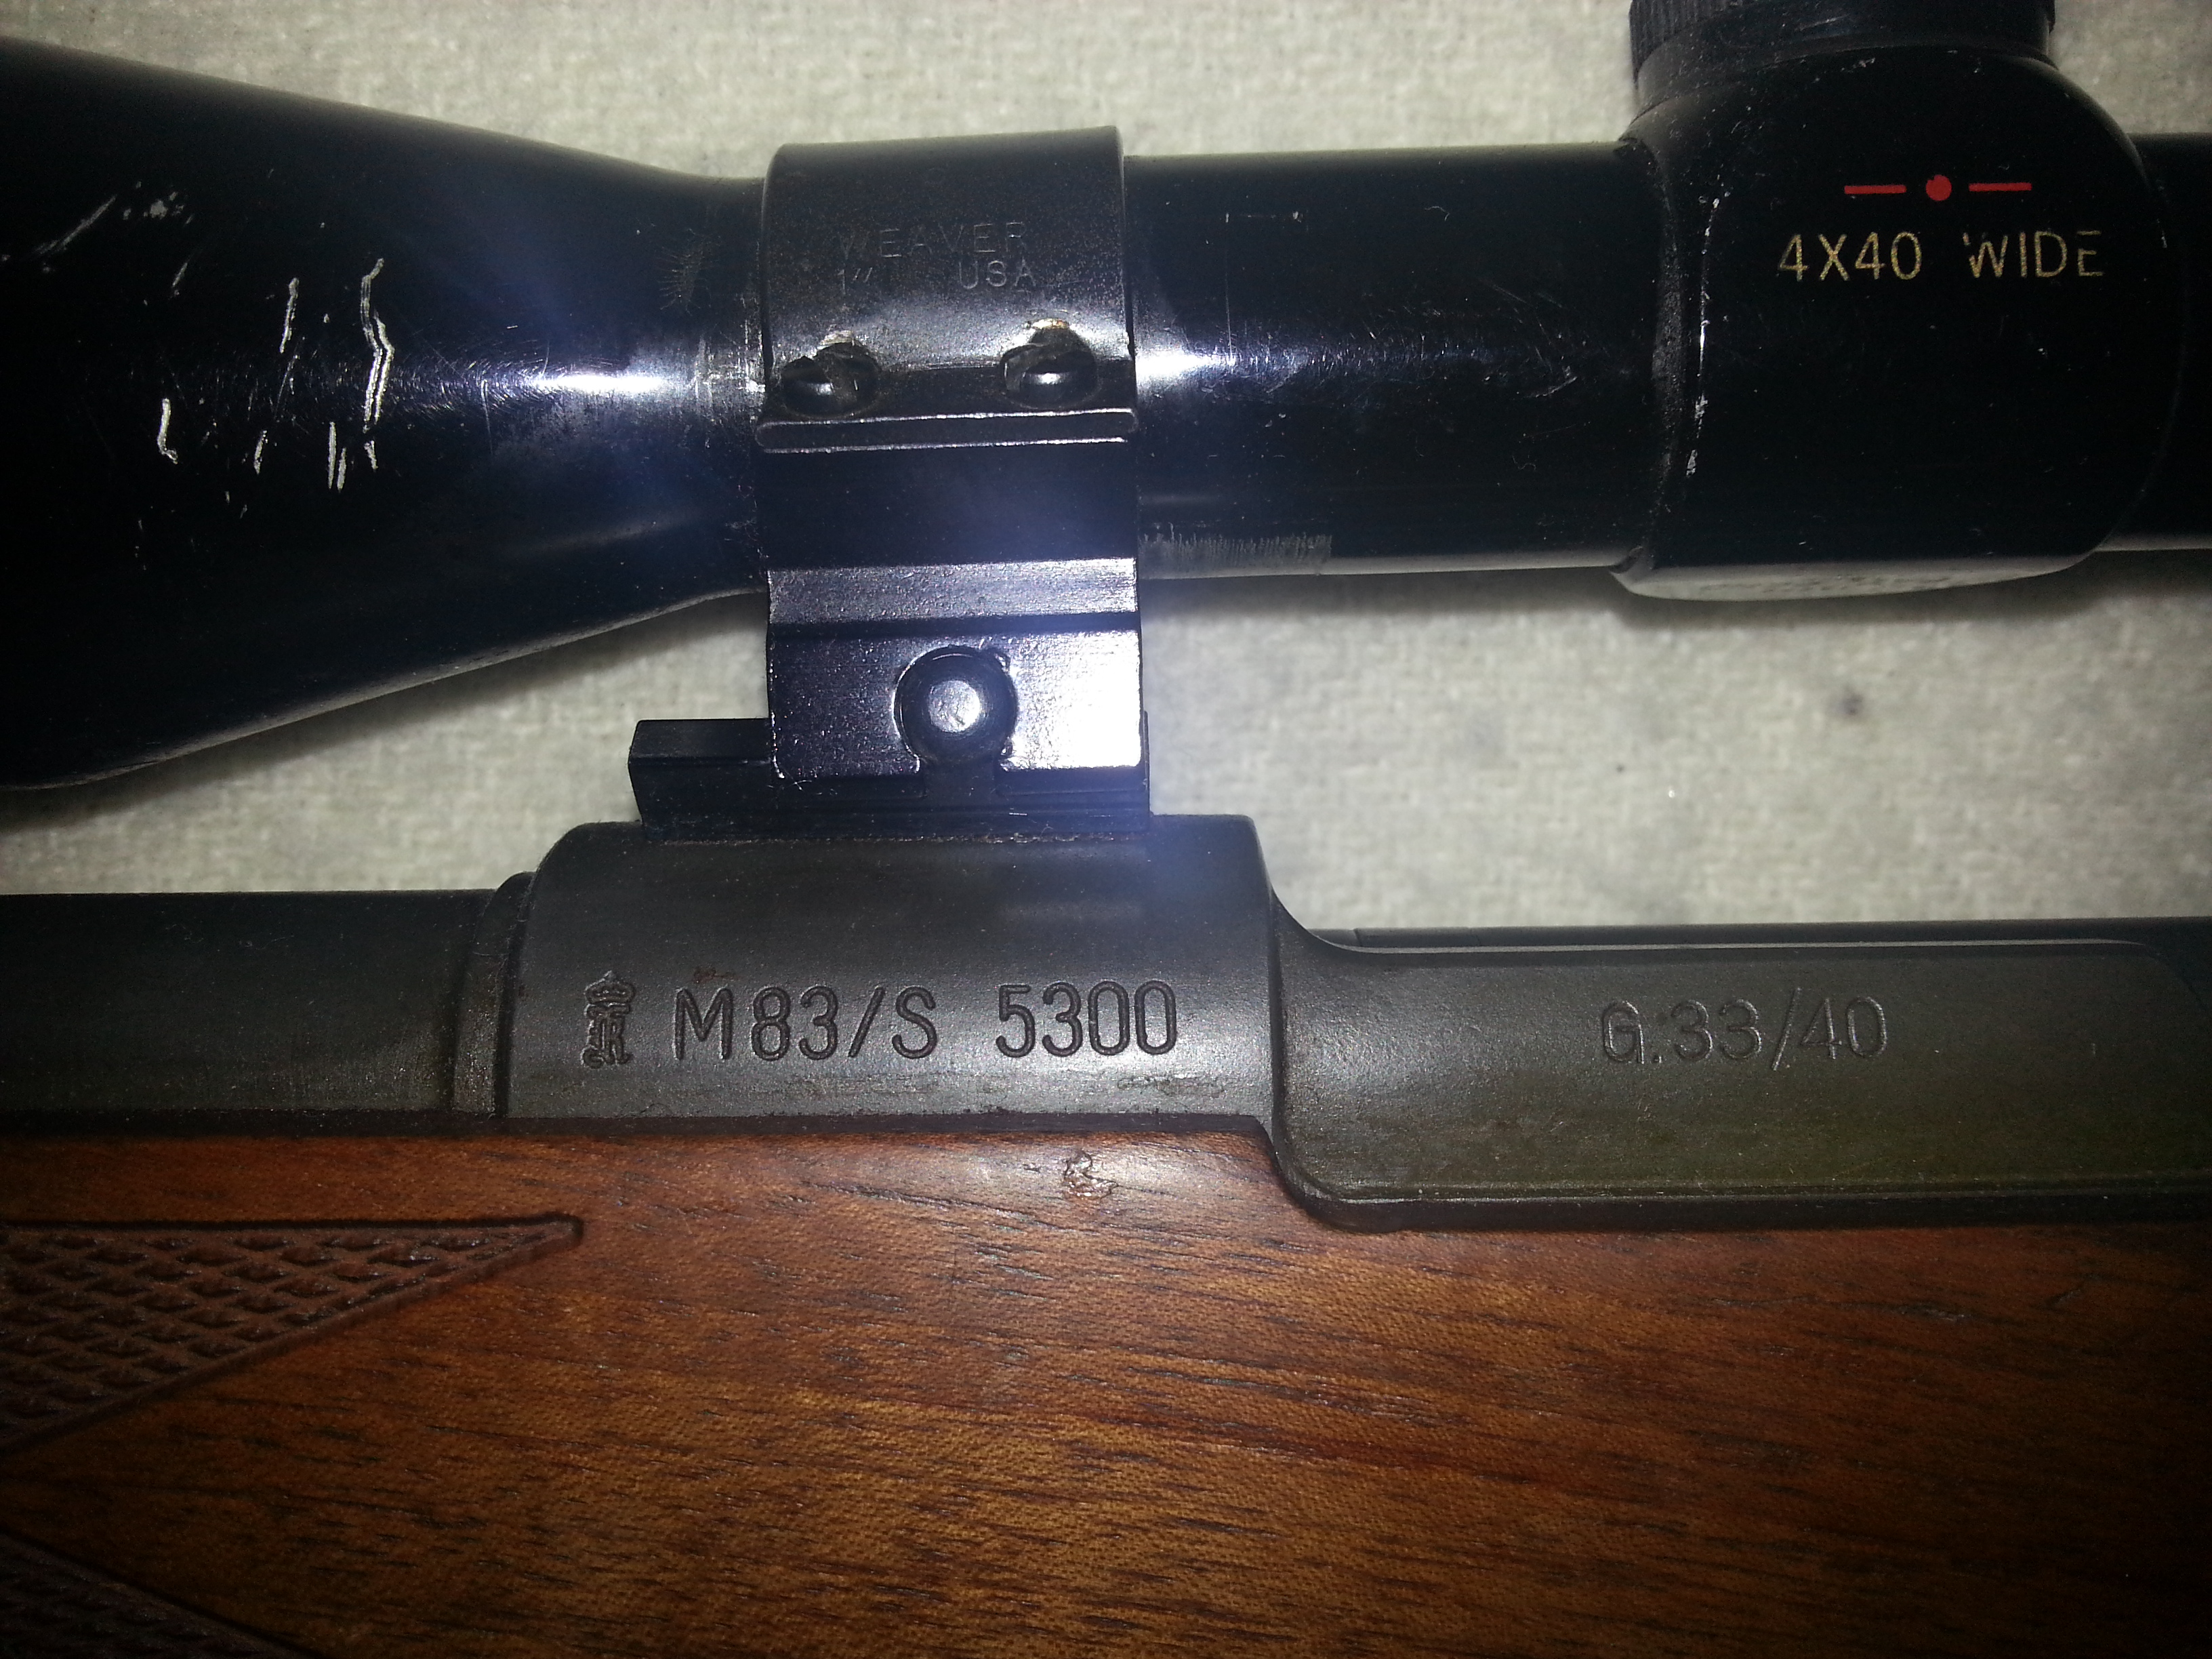 ./guns/rifle/bilder/Rifle-Kongsberg-M83S-5300-3.jpg